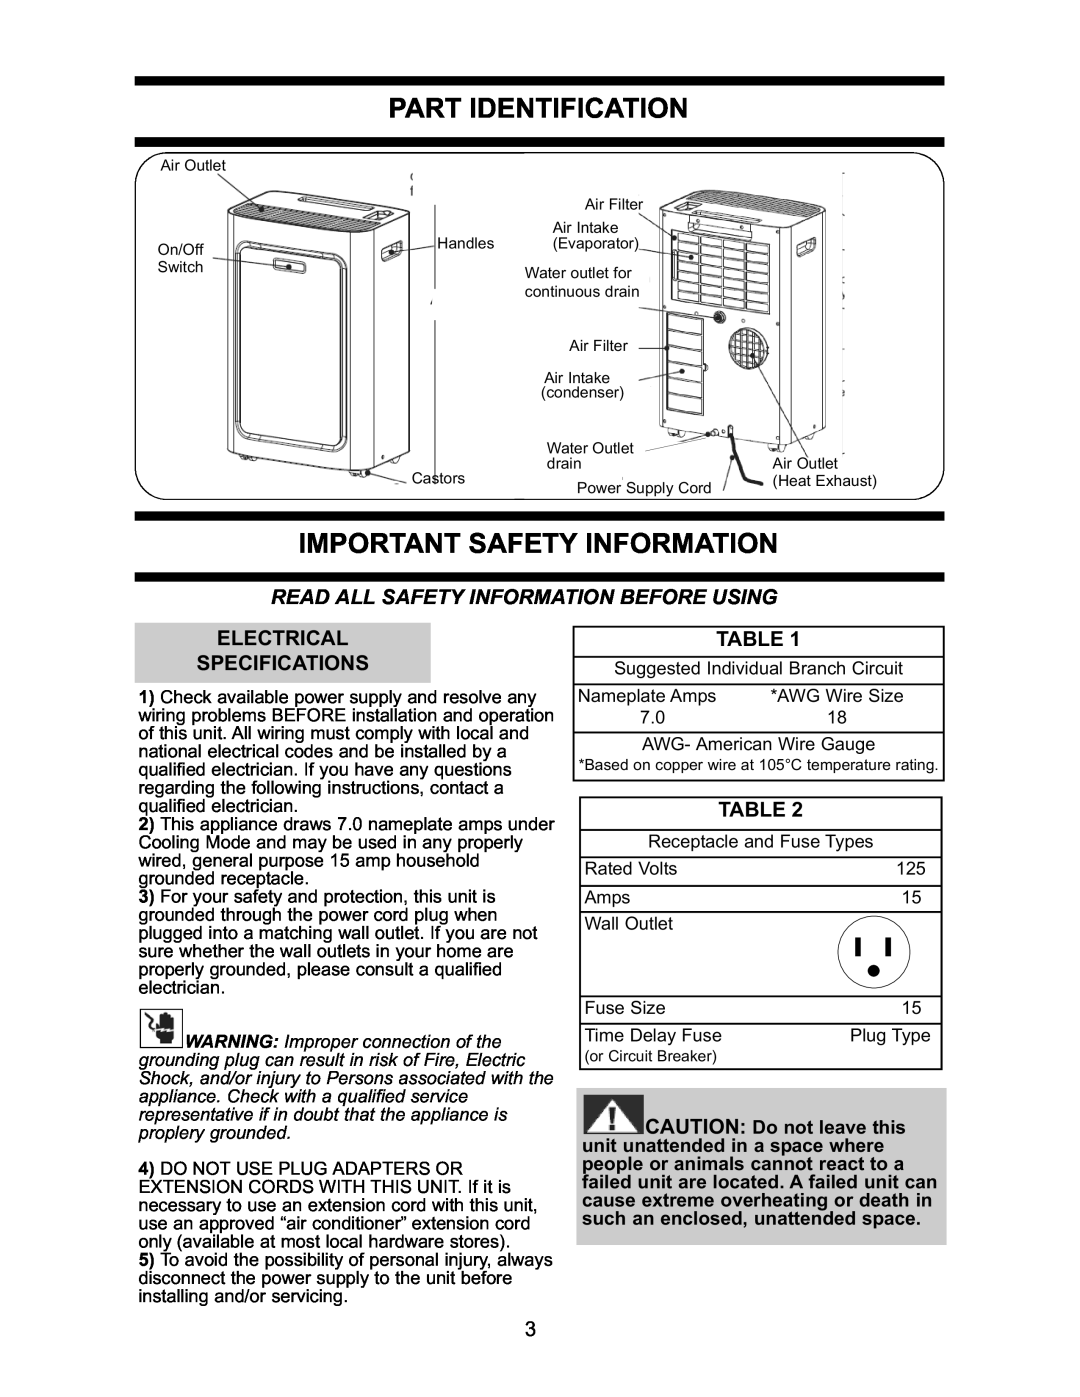 Danby DPAC7099 Part Identification, Important Safety Information, Read All Safety Information Before Using 